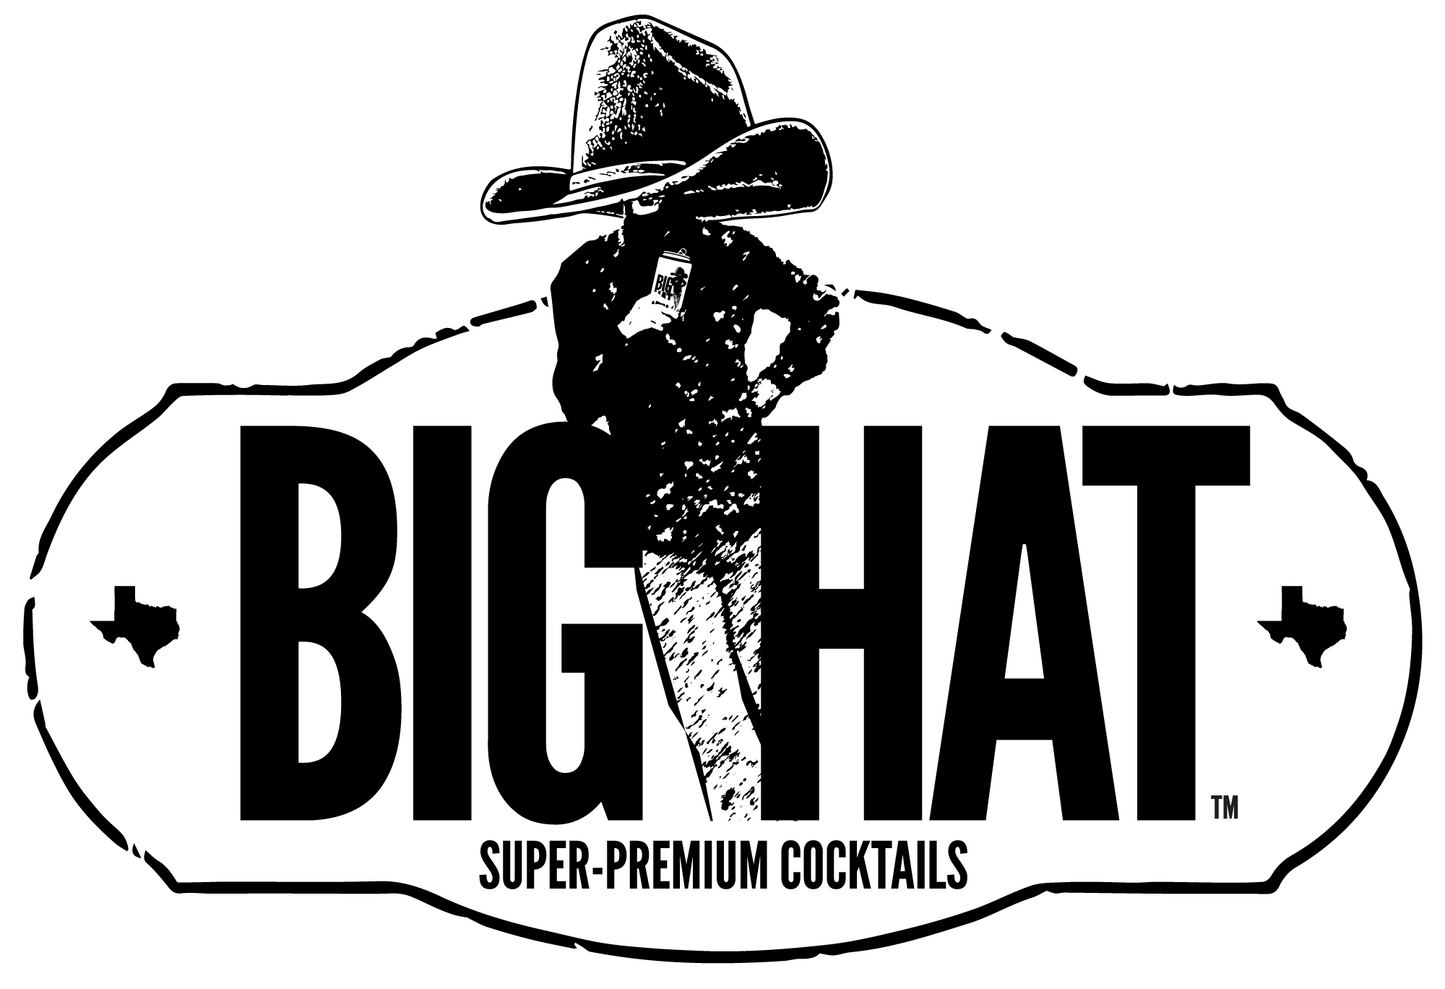 Big Hat Spirits